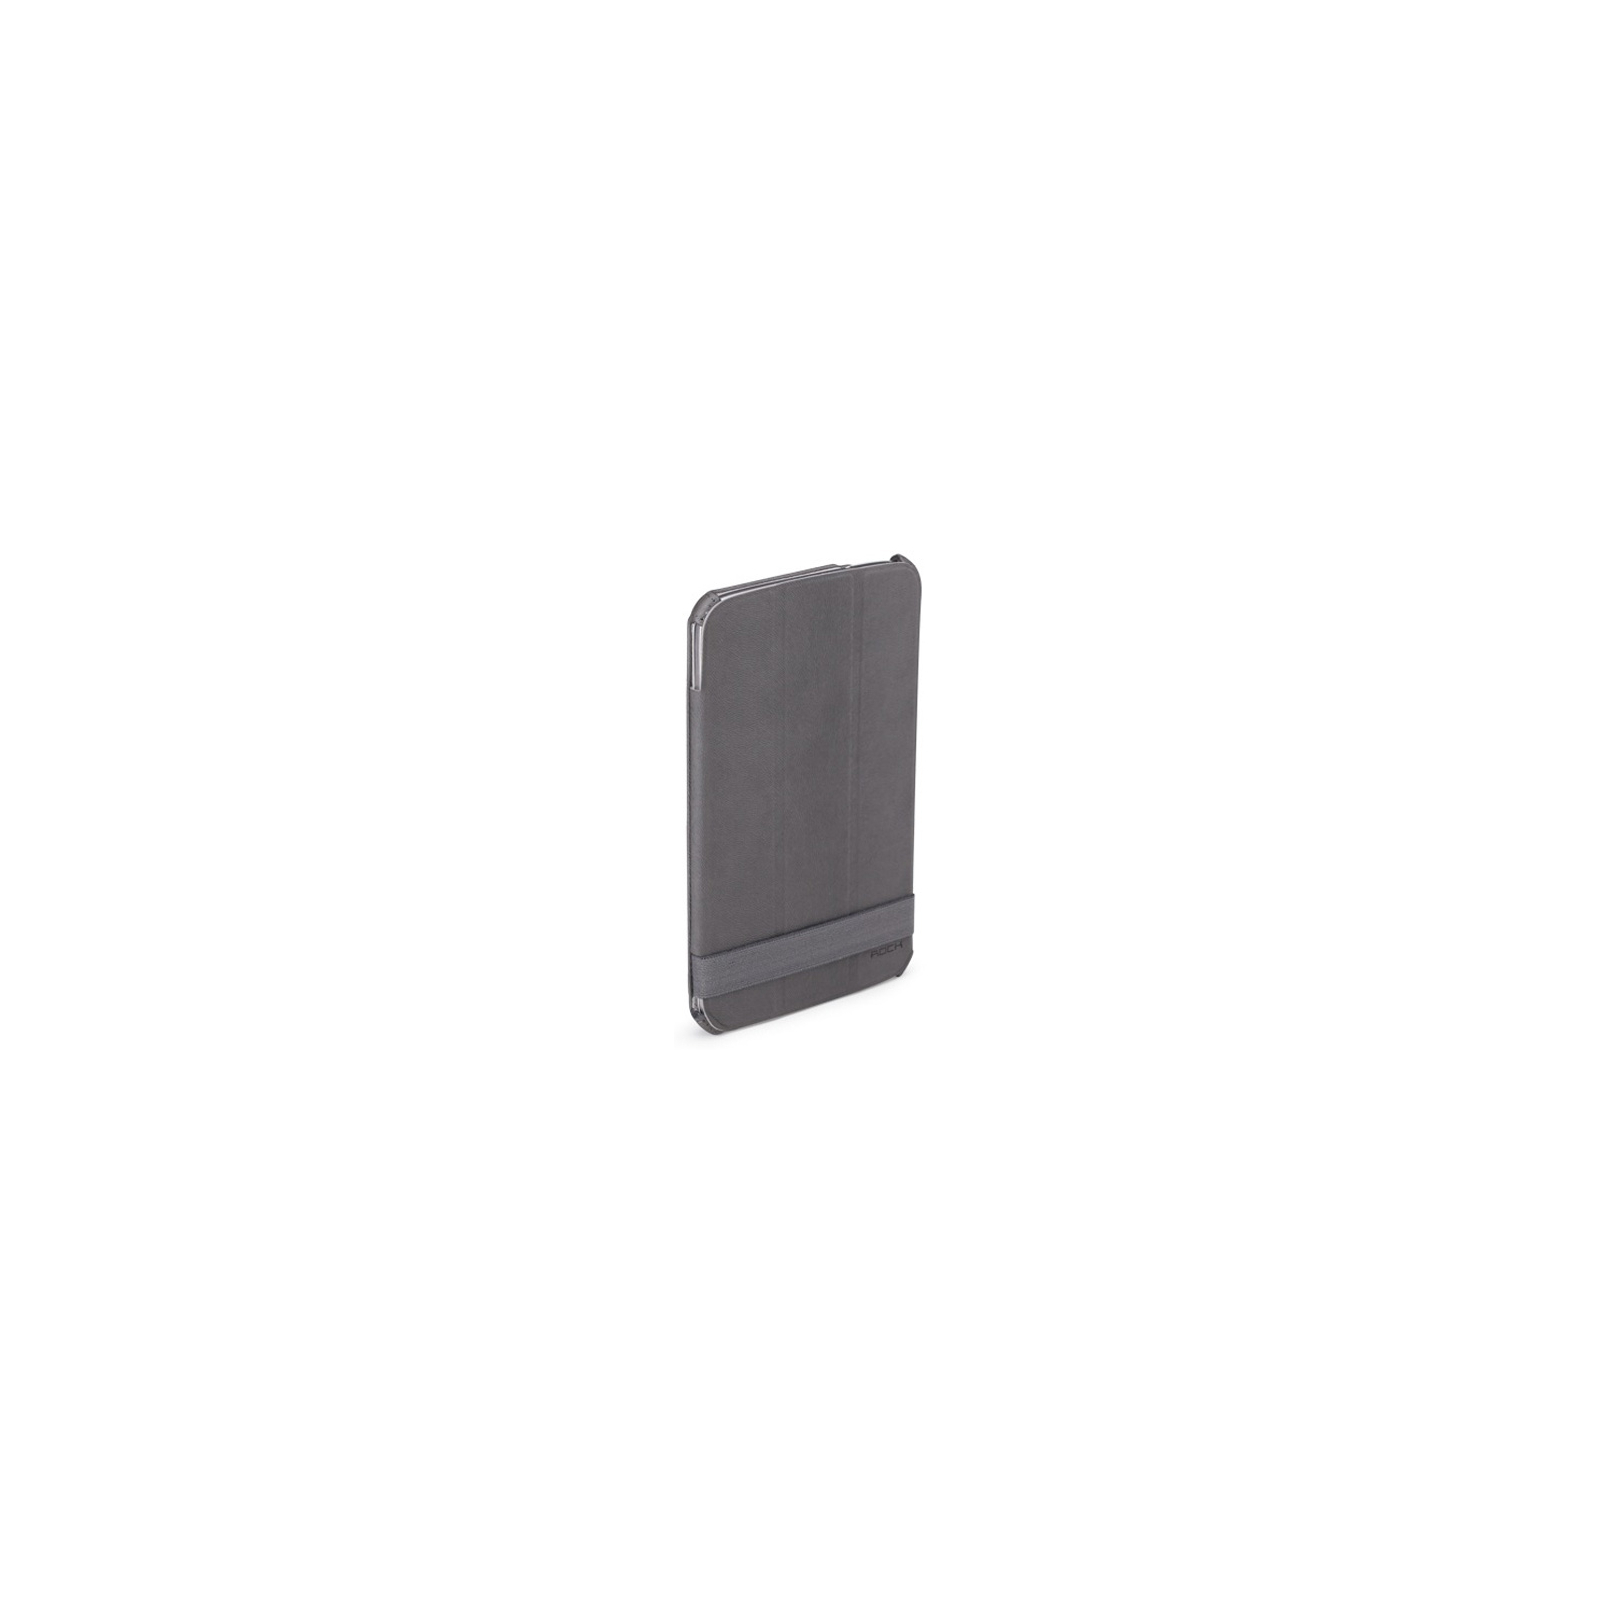 Чехол для планшета Rock Samsung Galaxy Tab3 8.0 T3100 Texture series dark grey (T3100-40018) изображение 4